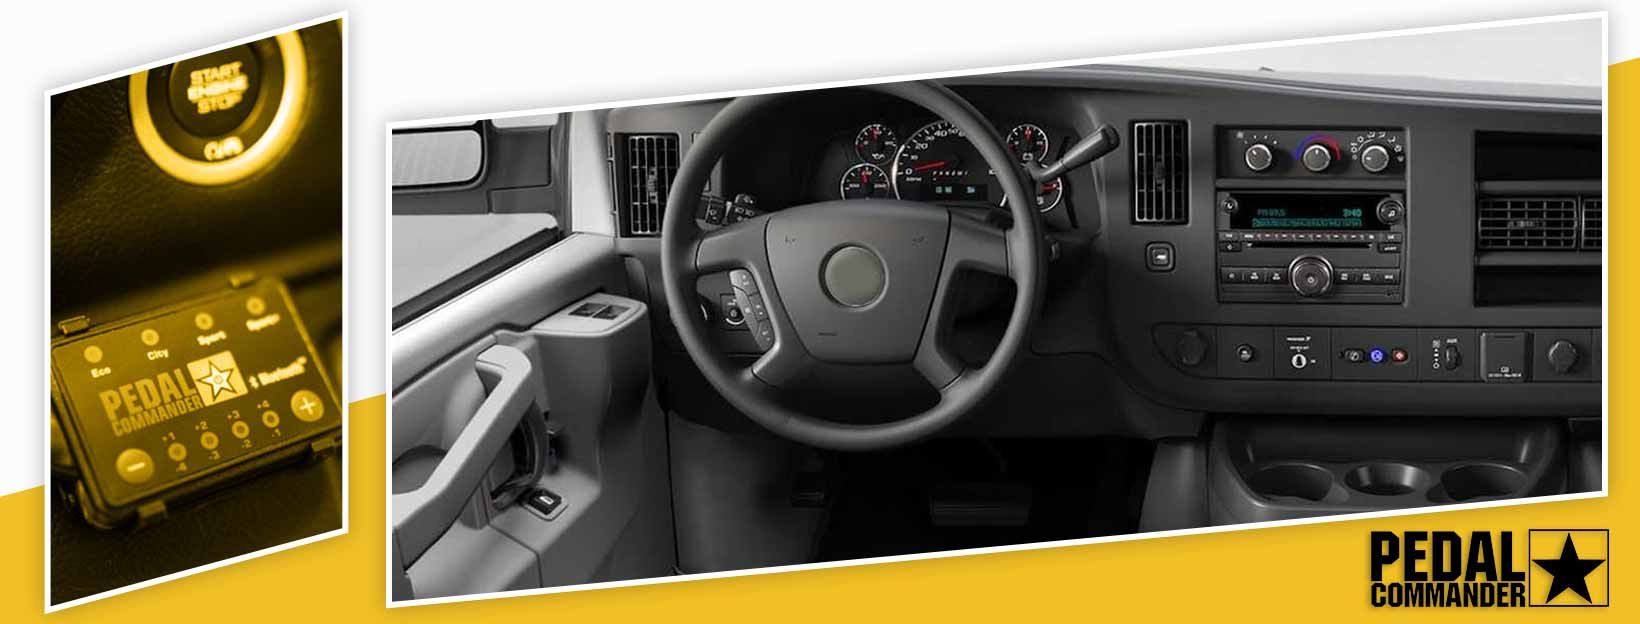 Pedal Commander for Chevrolet Express - interior